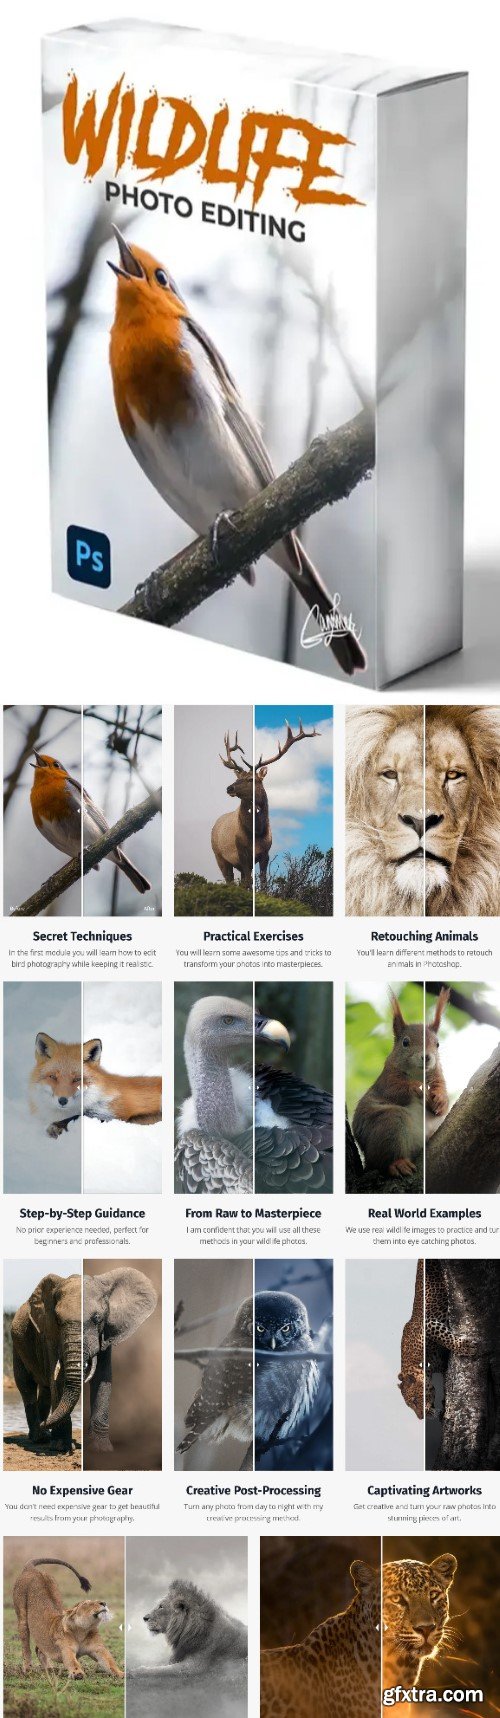 Zenja Gammer - Wildlife Photo Editing Course